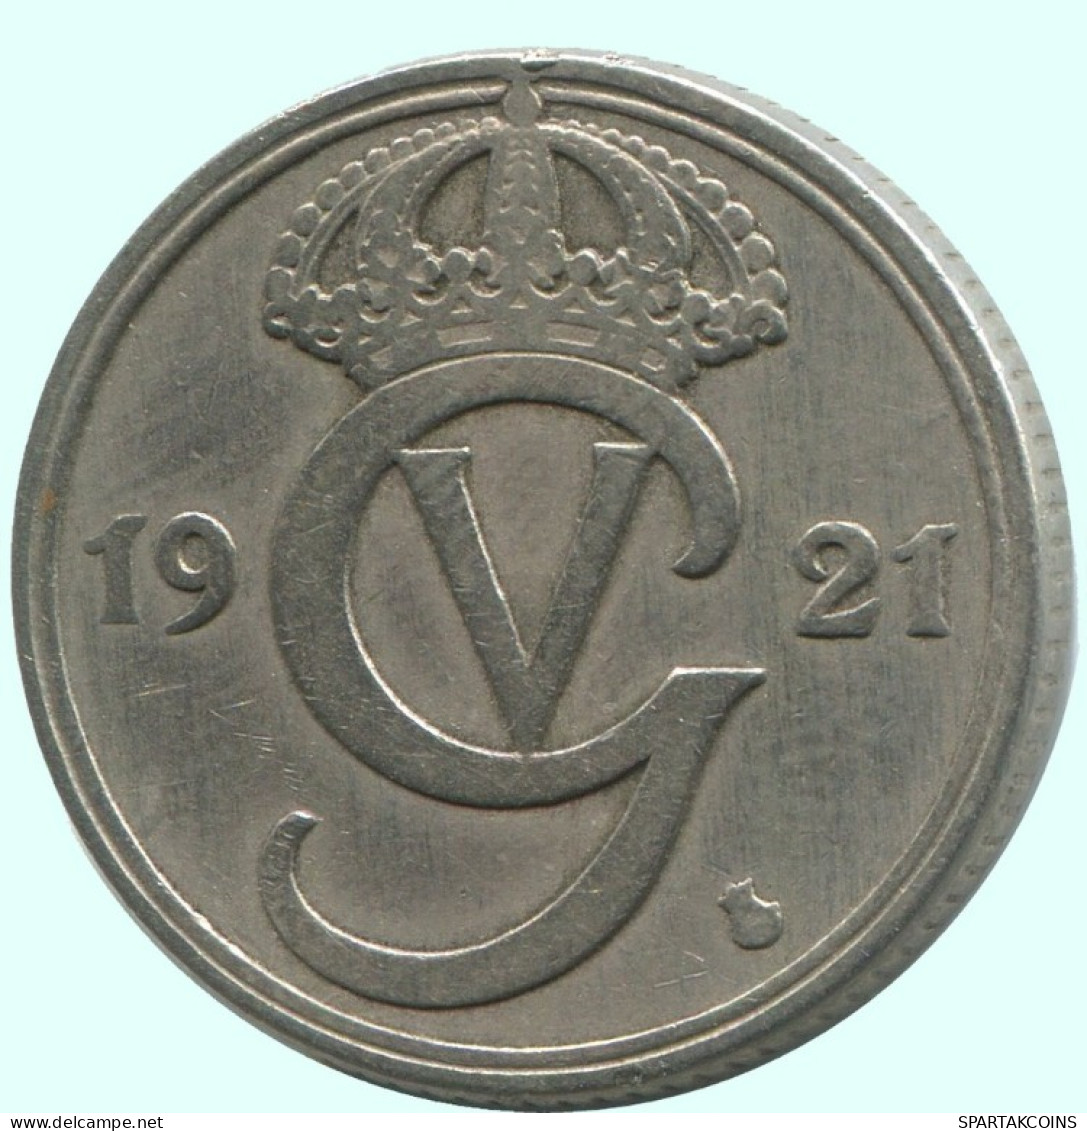 50 ORE 1921 W SUECIA SWEDEN Moneda RARE #AC694.2.E.A - Suède